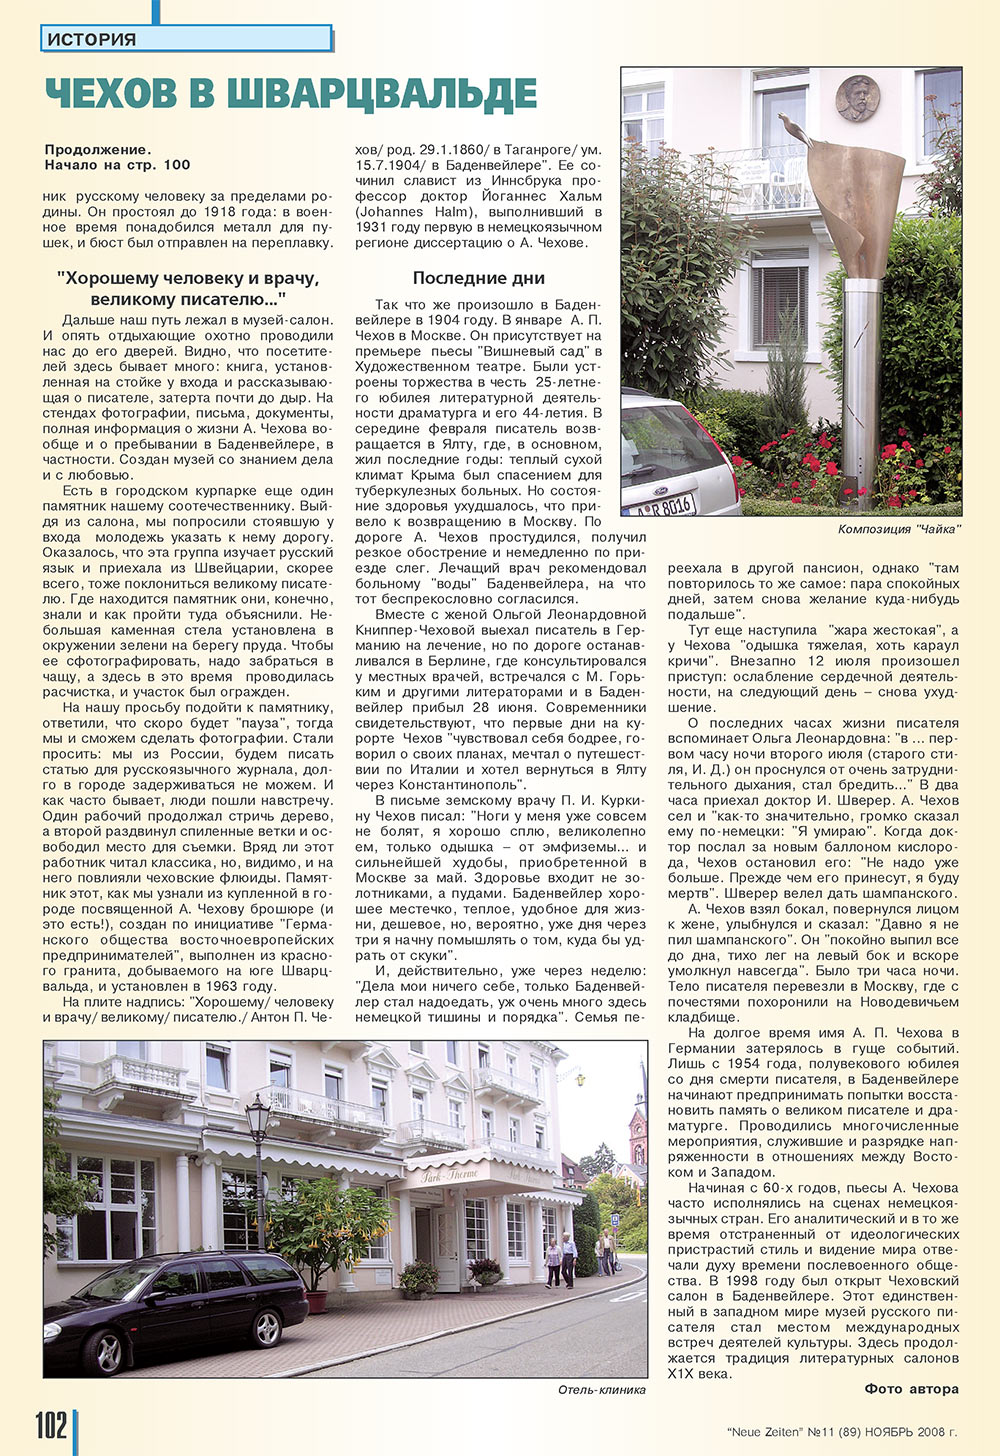 Neue Zeiten (журнал). 2008 год, номер 11, стр. 102